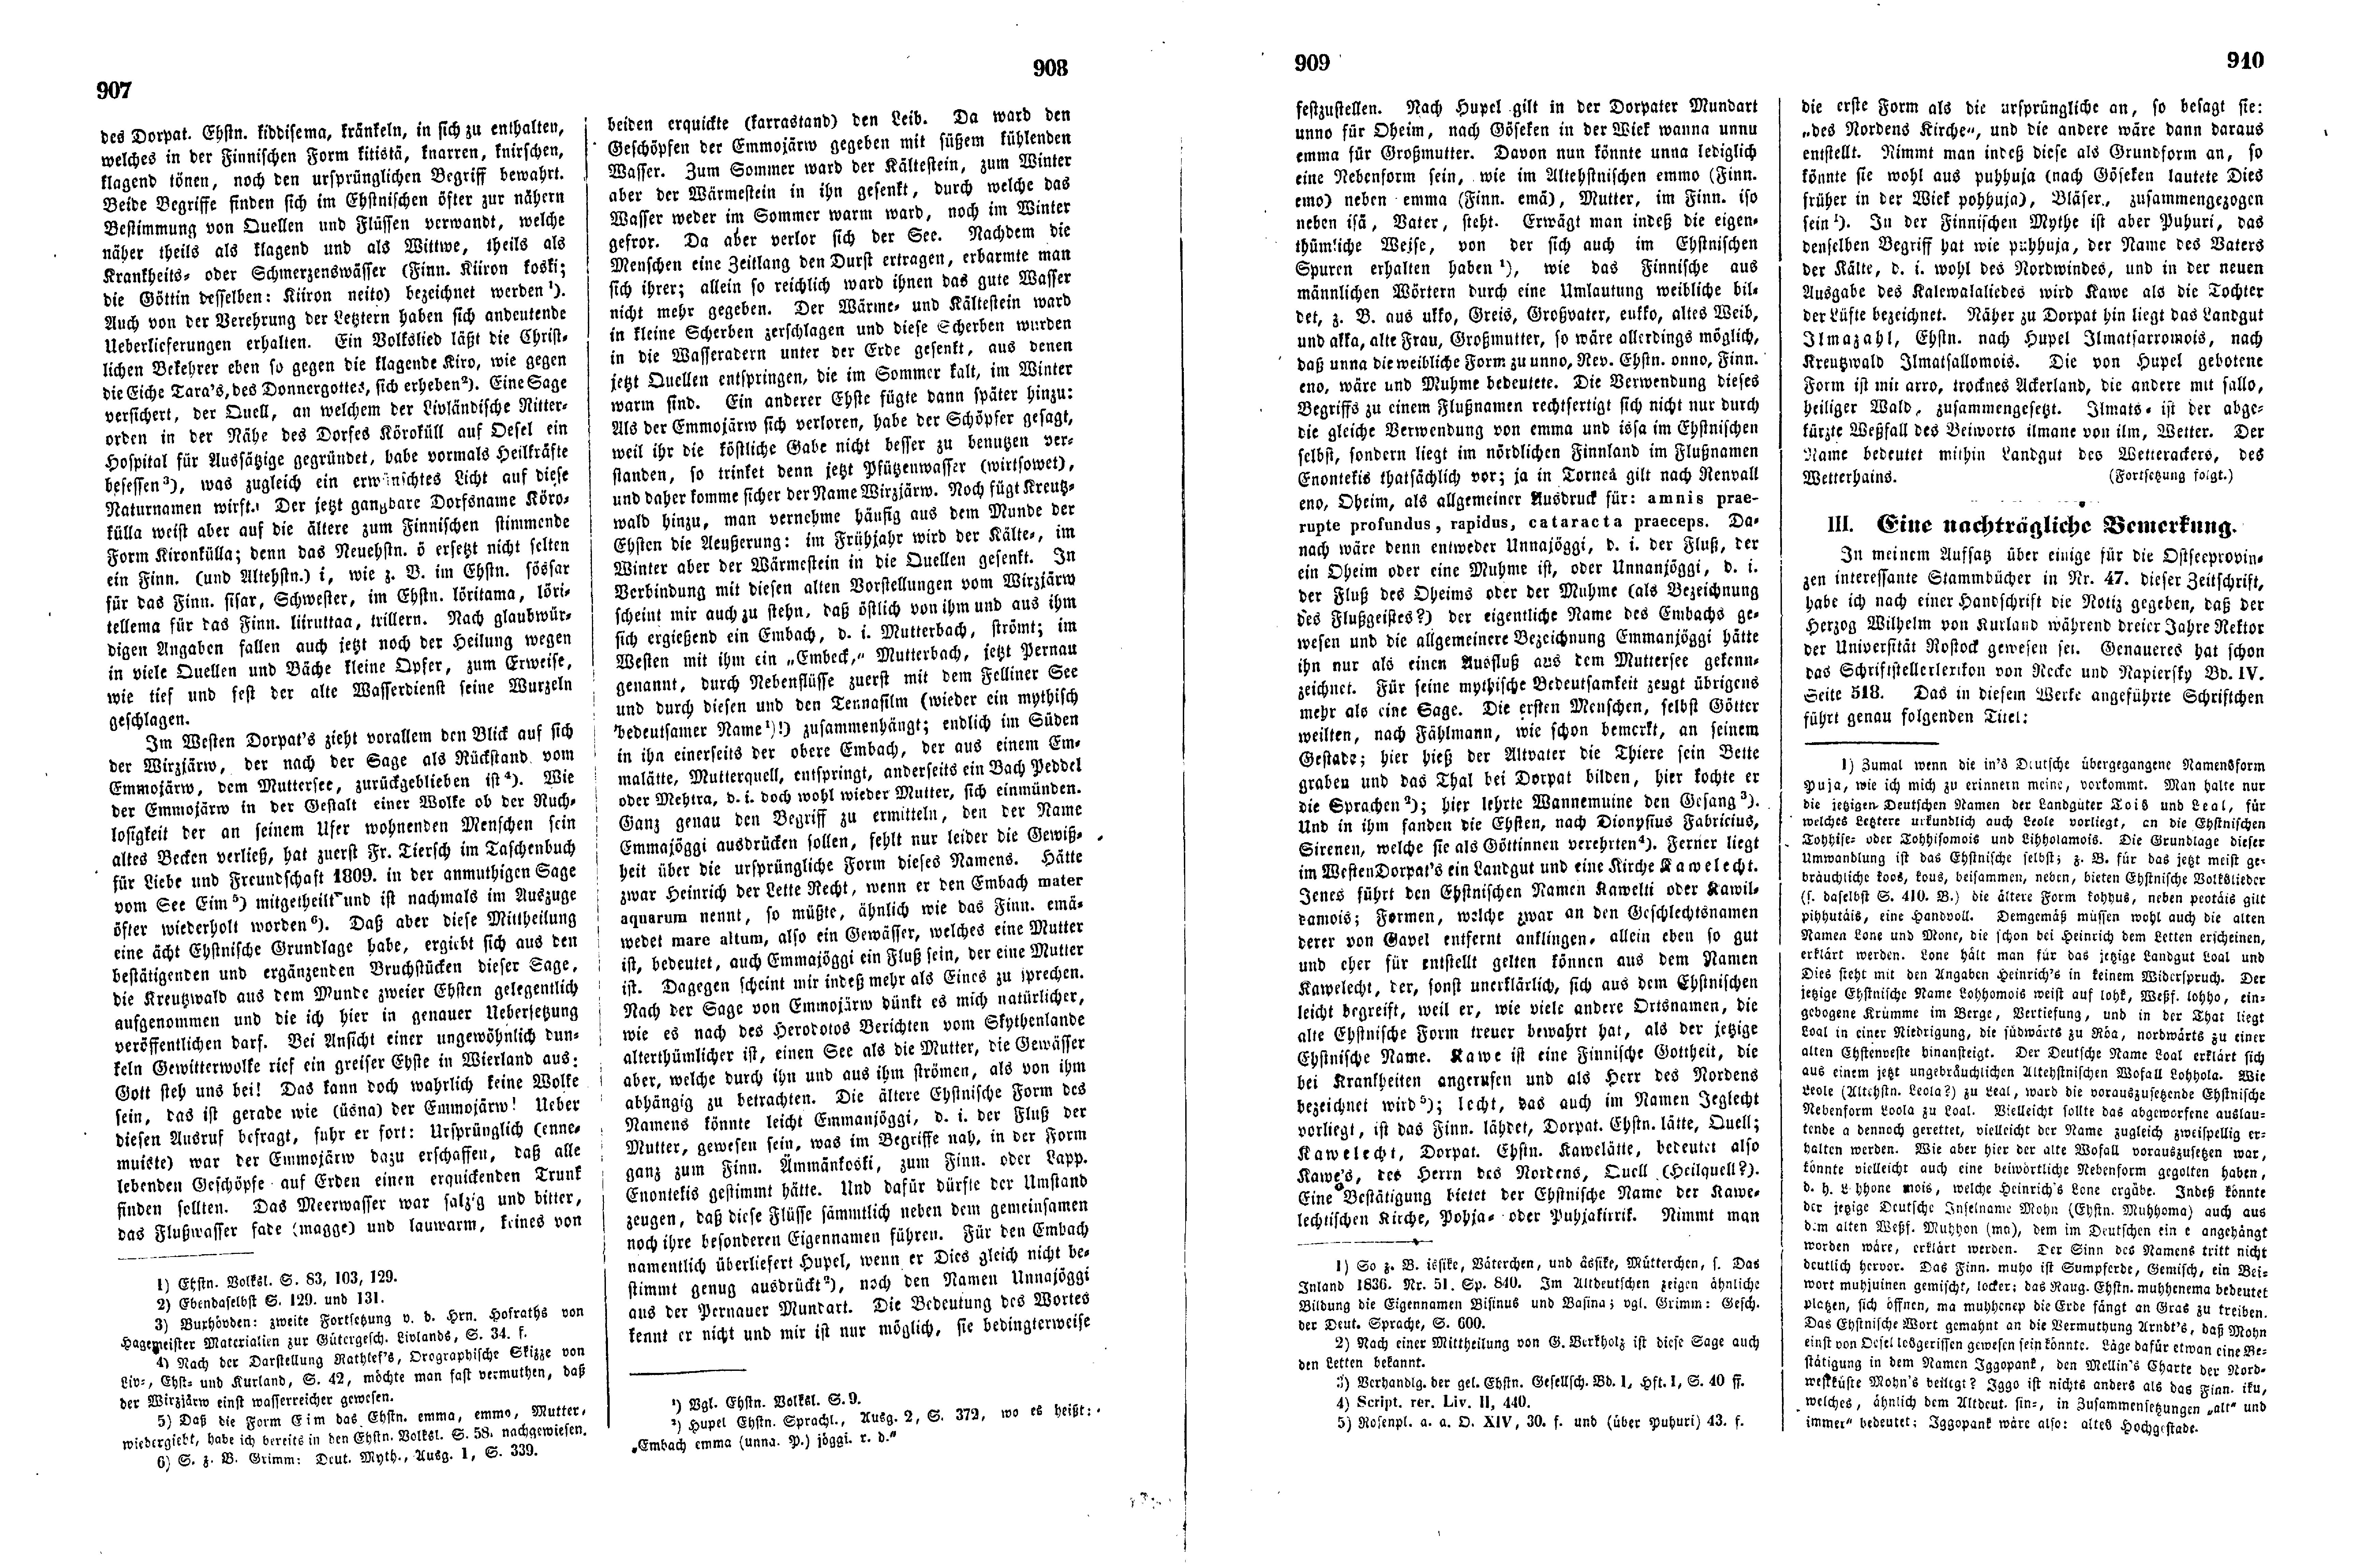 Das Inland [17] (1852) | 232. (907-910) Main body of text